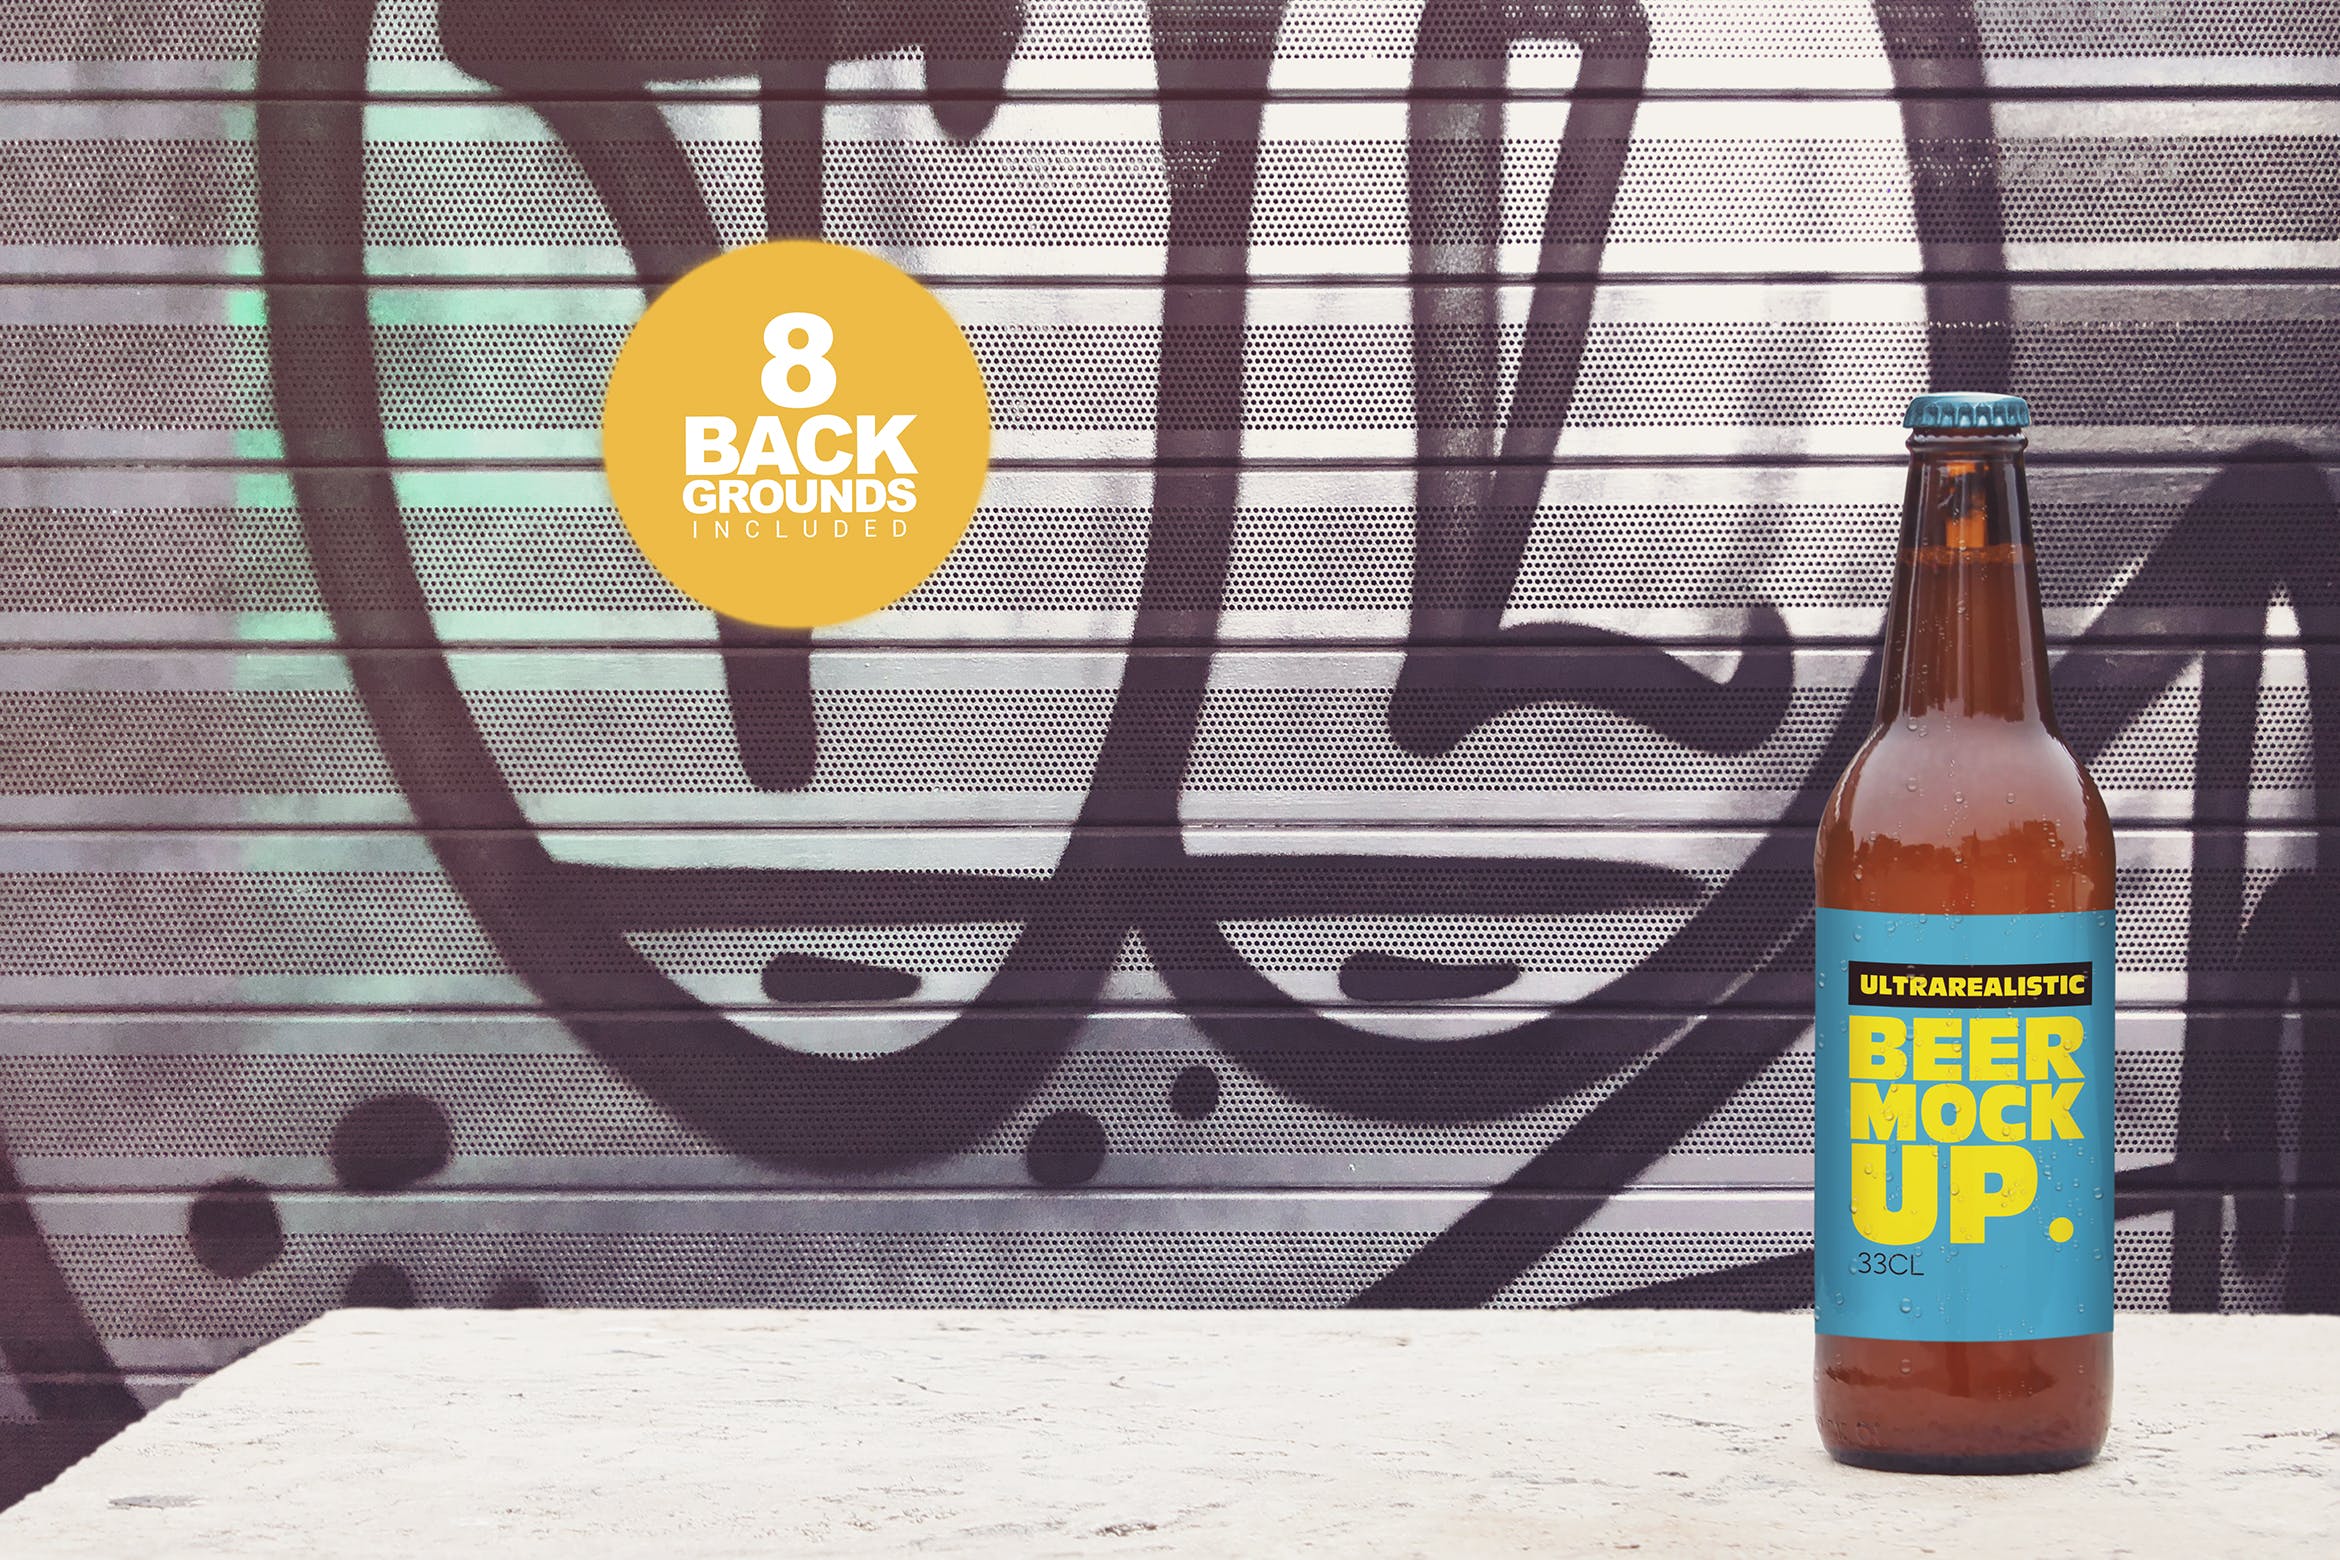 50cl啤酒瓶外观设计预览16设计网精选 50cl Garage Beer Mockup插图